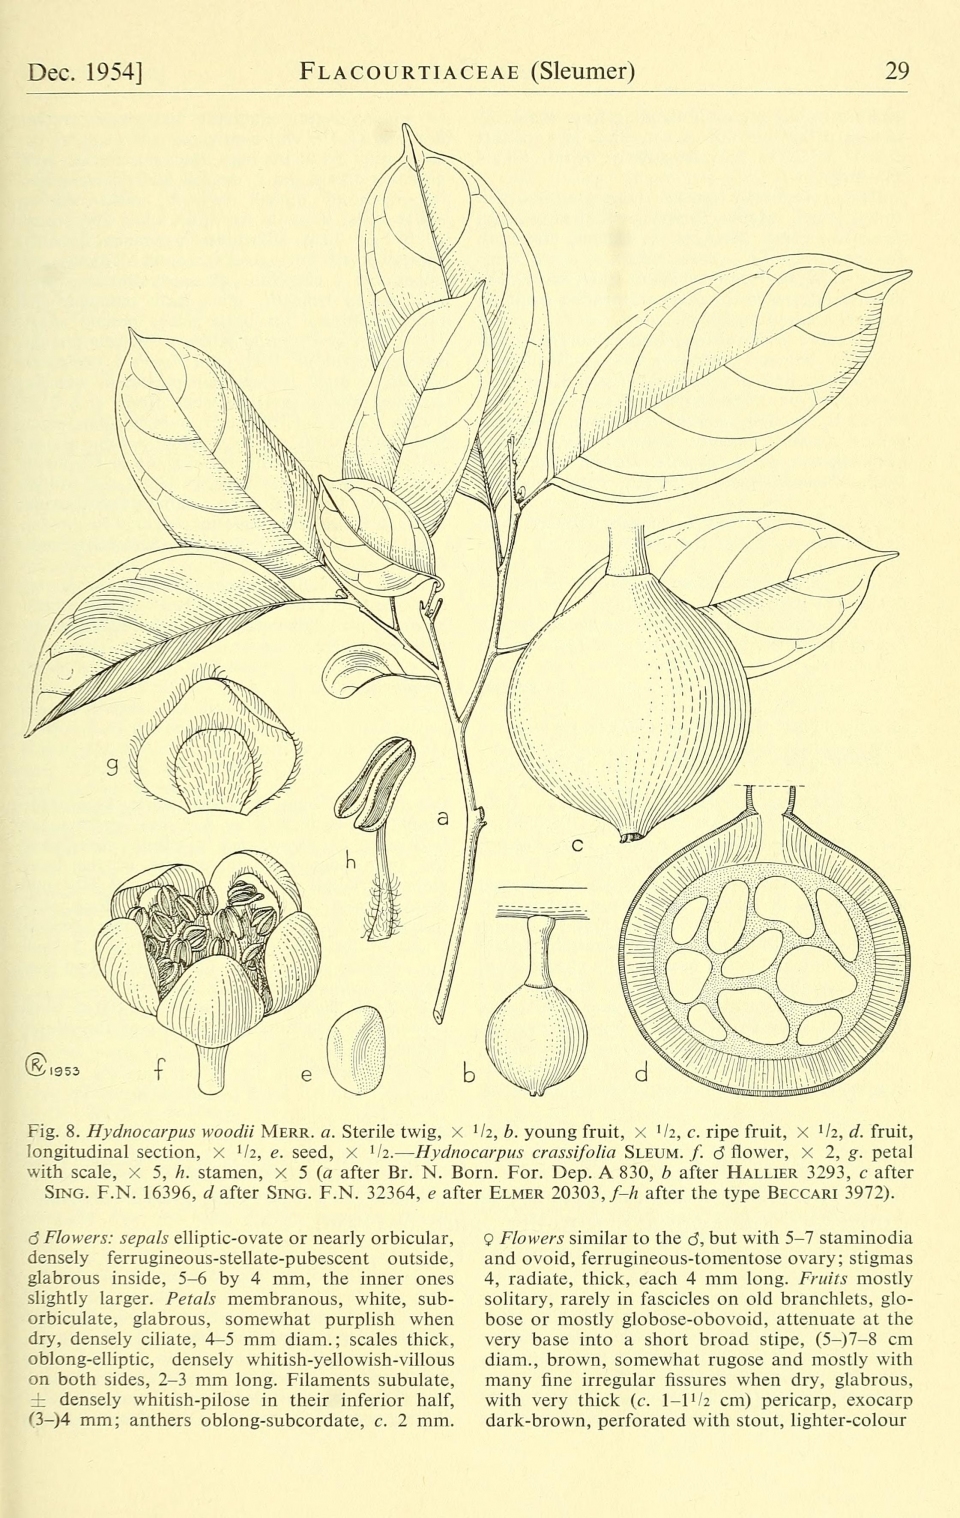 Hydnocarpus woodii